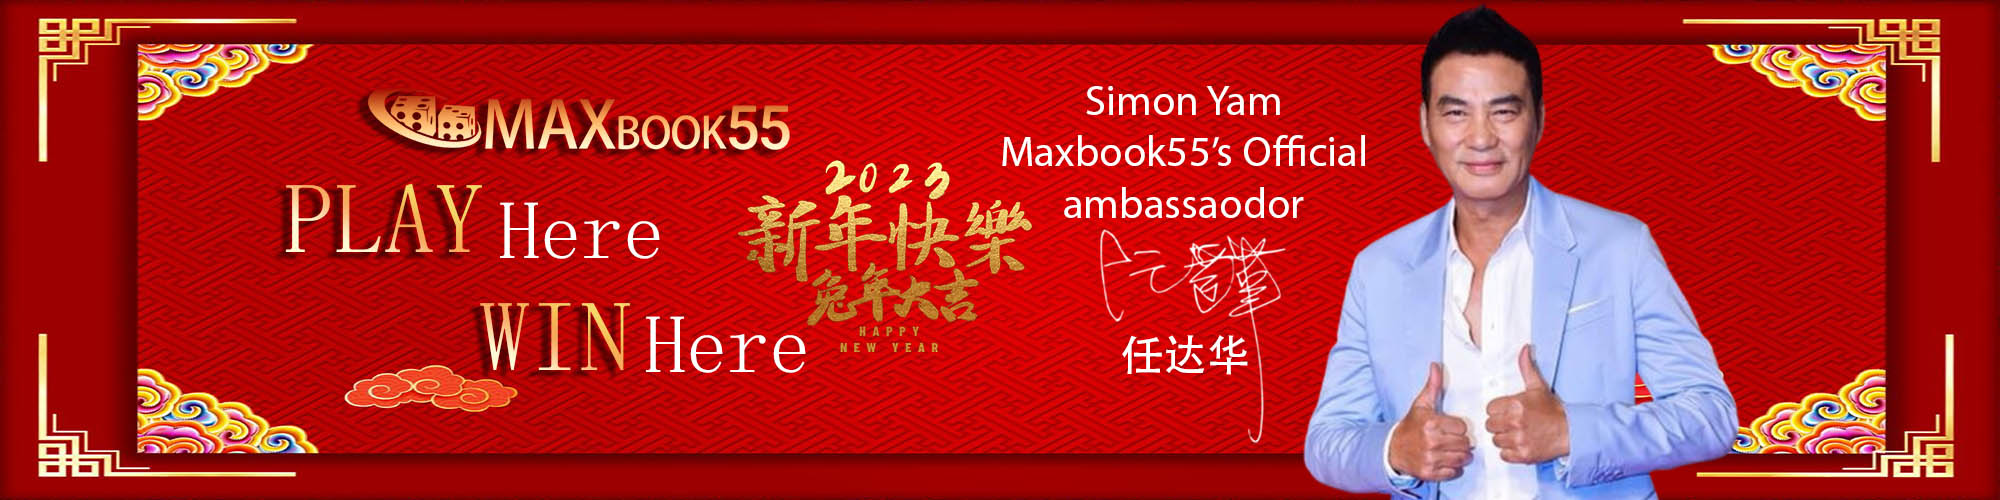 MAXBOOK55's Official Ambassaodor